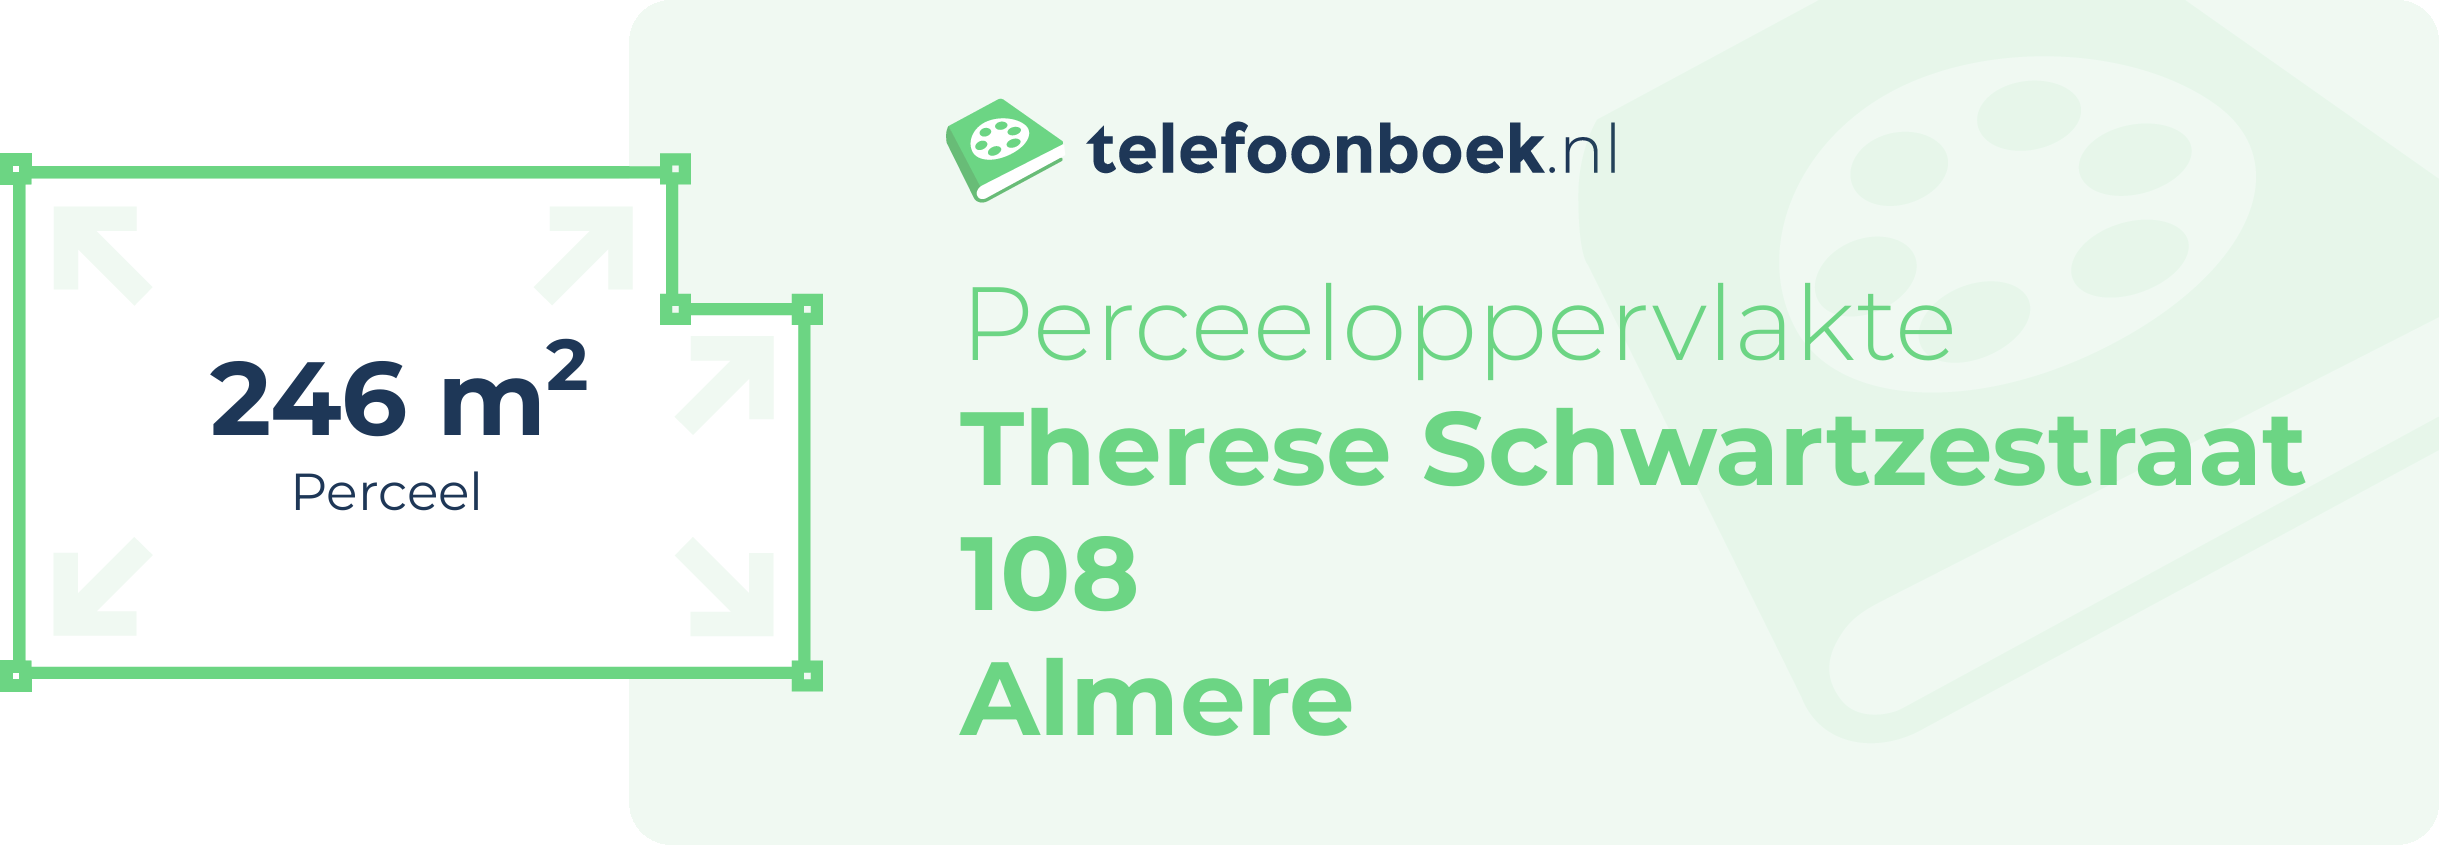 Perceeloppervlakte Therese Schwartzestraat 108 Almere